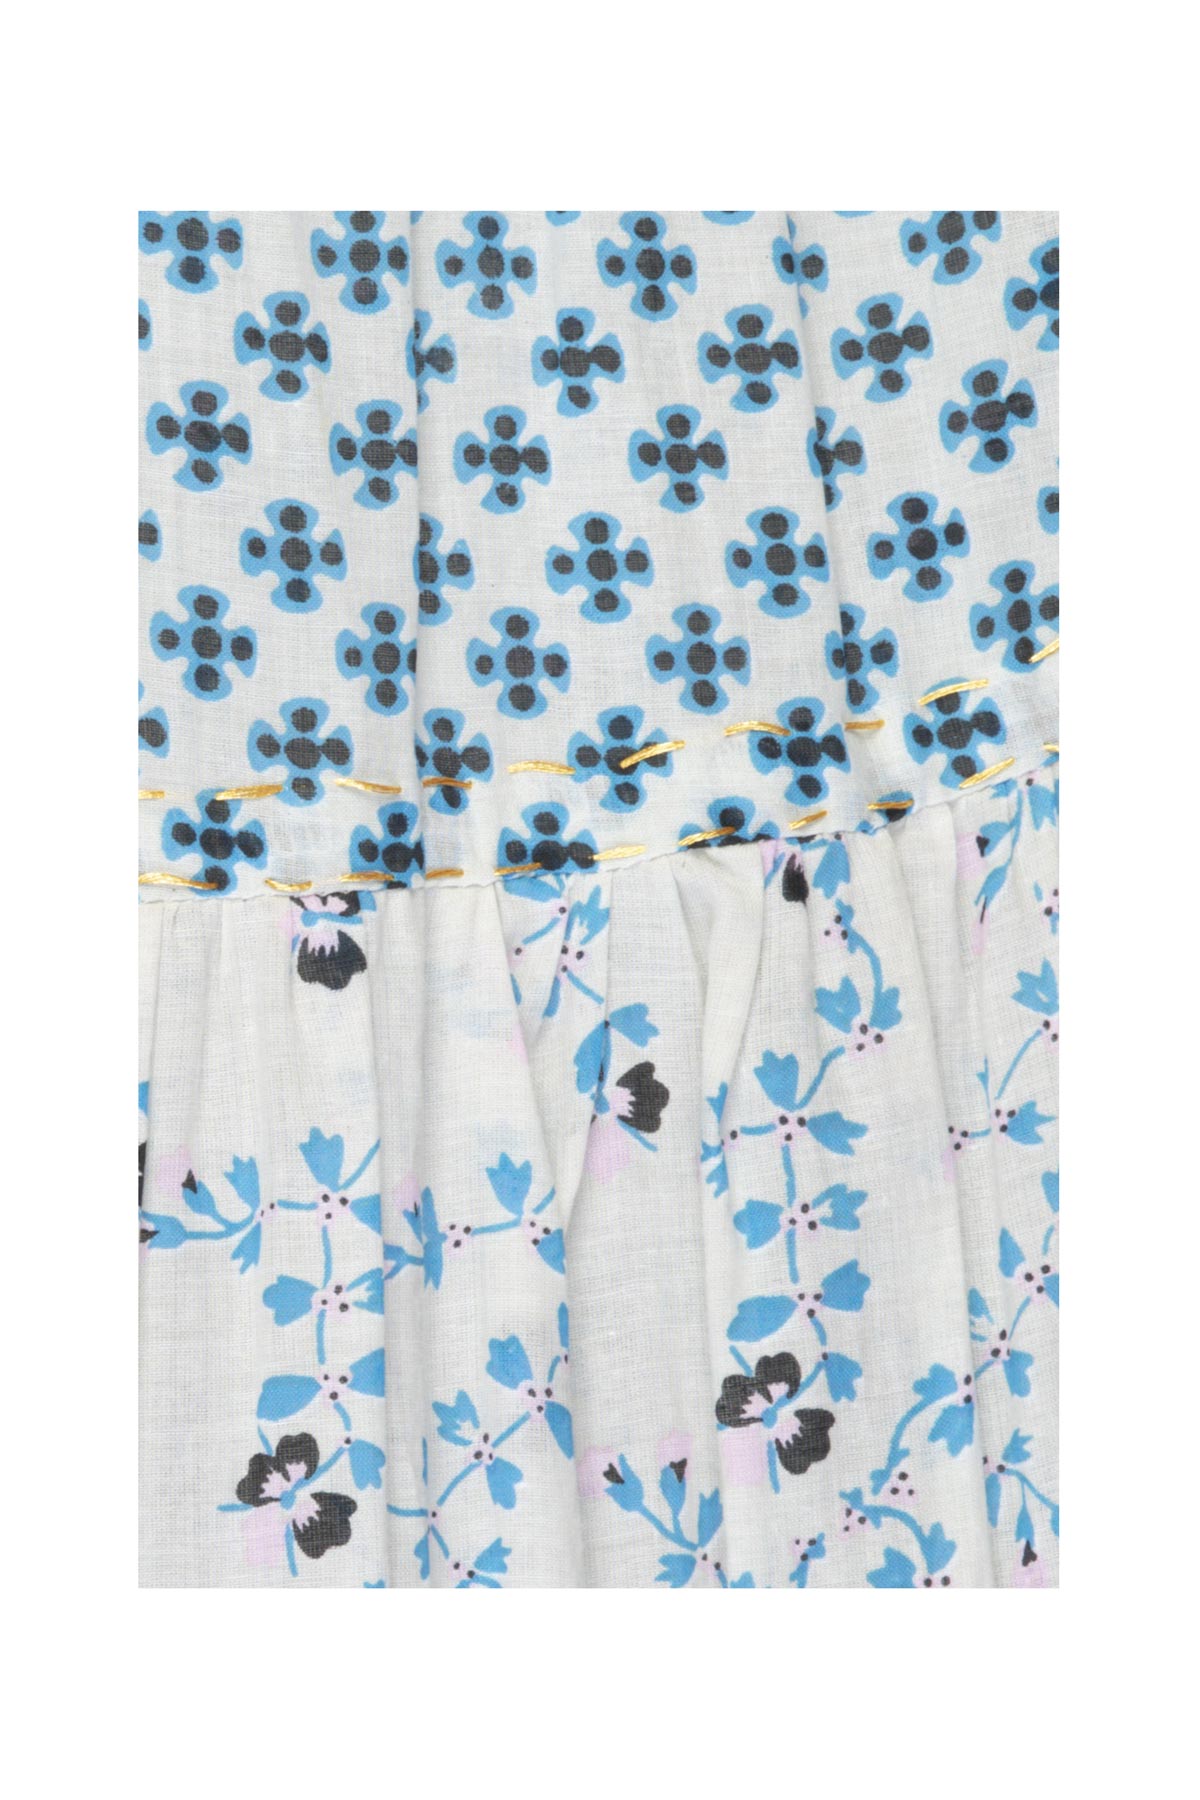 Sleeveless Ibiza Maxi Dress - Pale Blue Floral